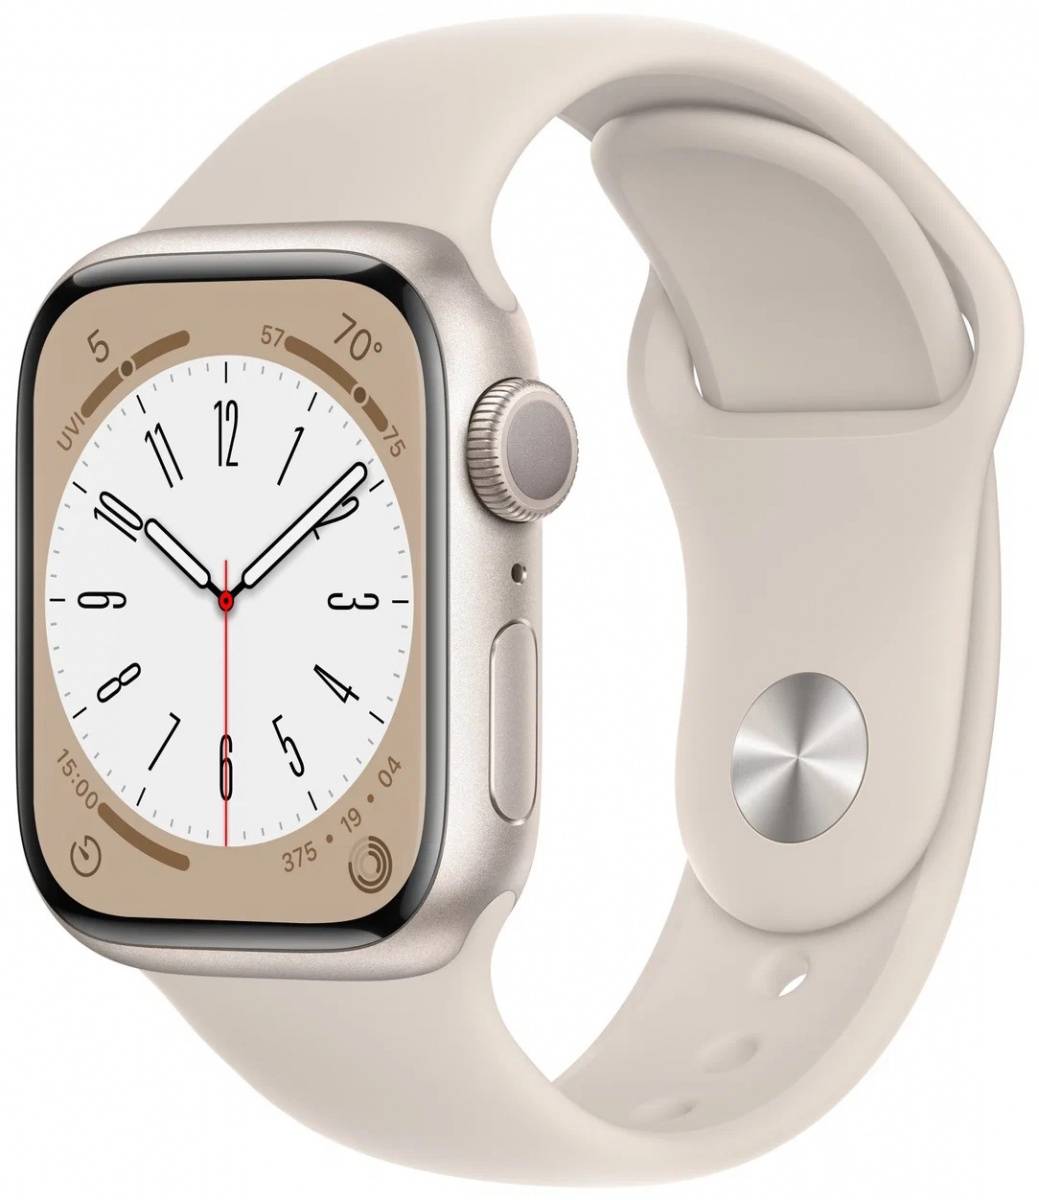 Apple watch series 3 против apple watch series 1